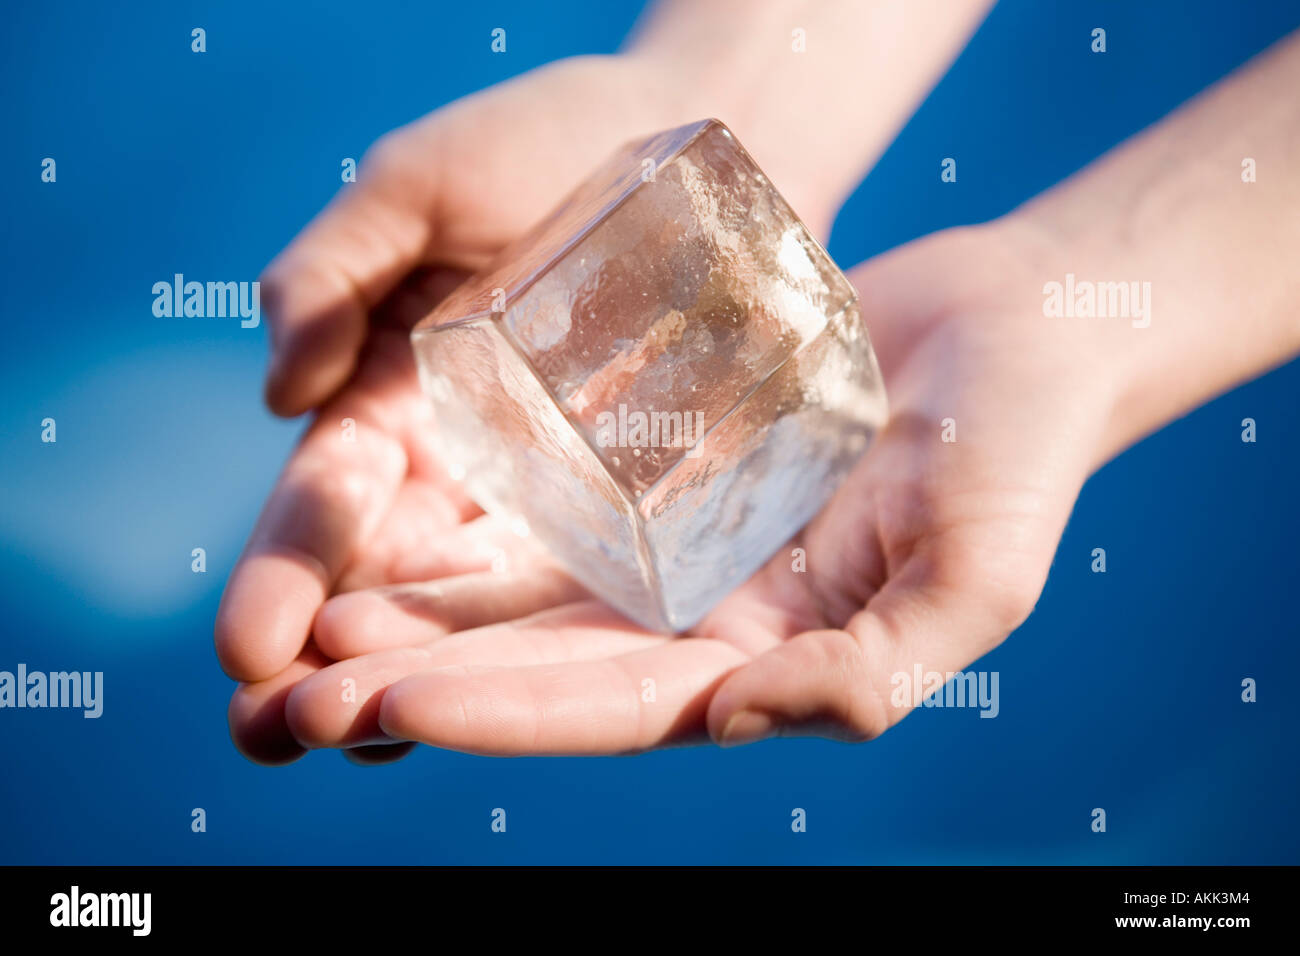 https://c8.alamy.com/comp/AKK3M4/close-up-of-hand-holding-ice-cube-AKK3M4.jpg